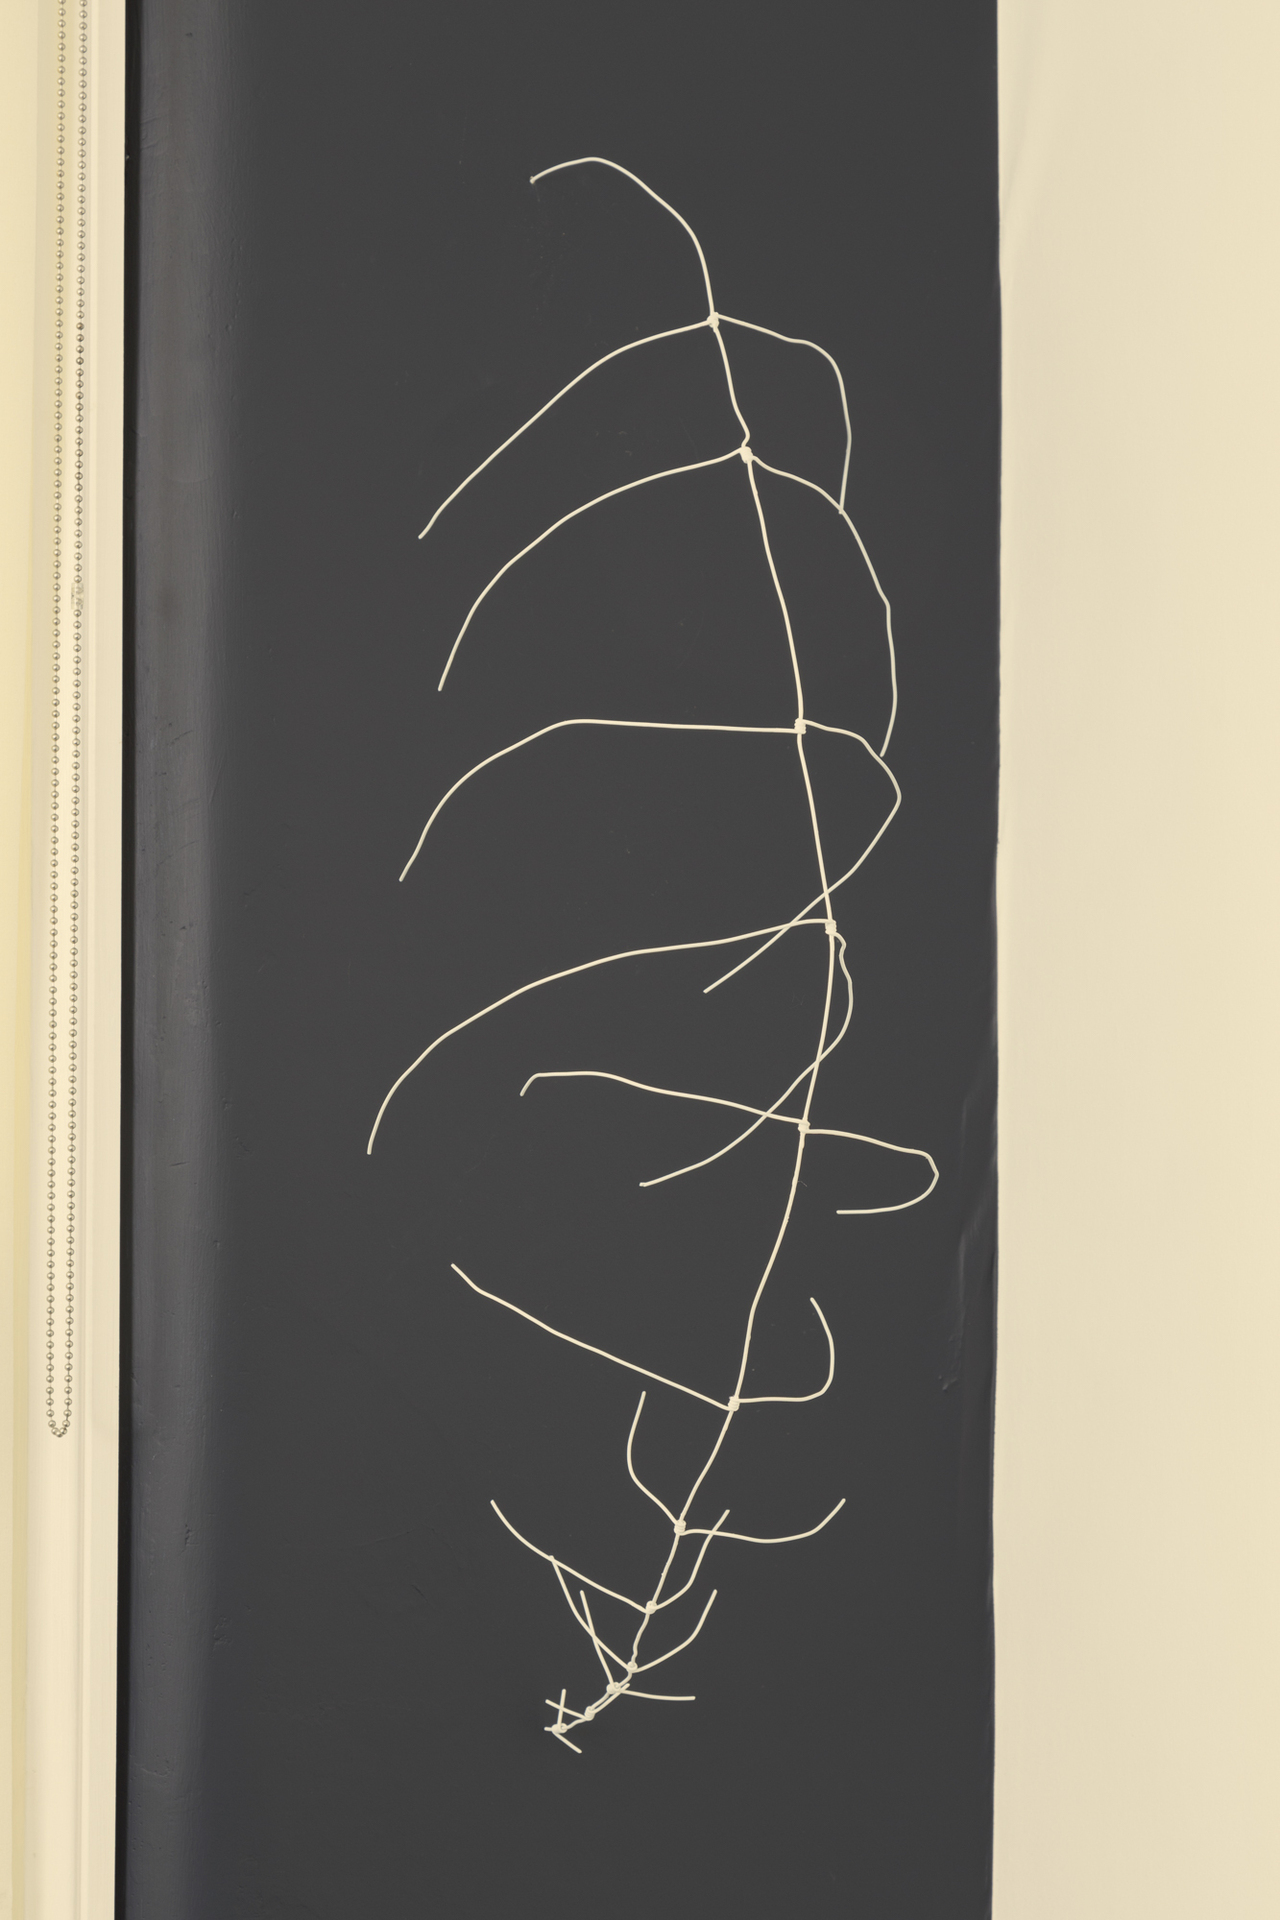 Sam Austen, Skeleton Palm, 2021, Wire, spray paint, 82cm x 26cm x 34cm